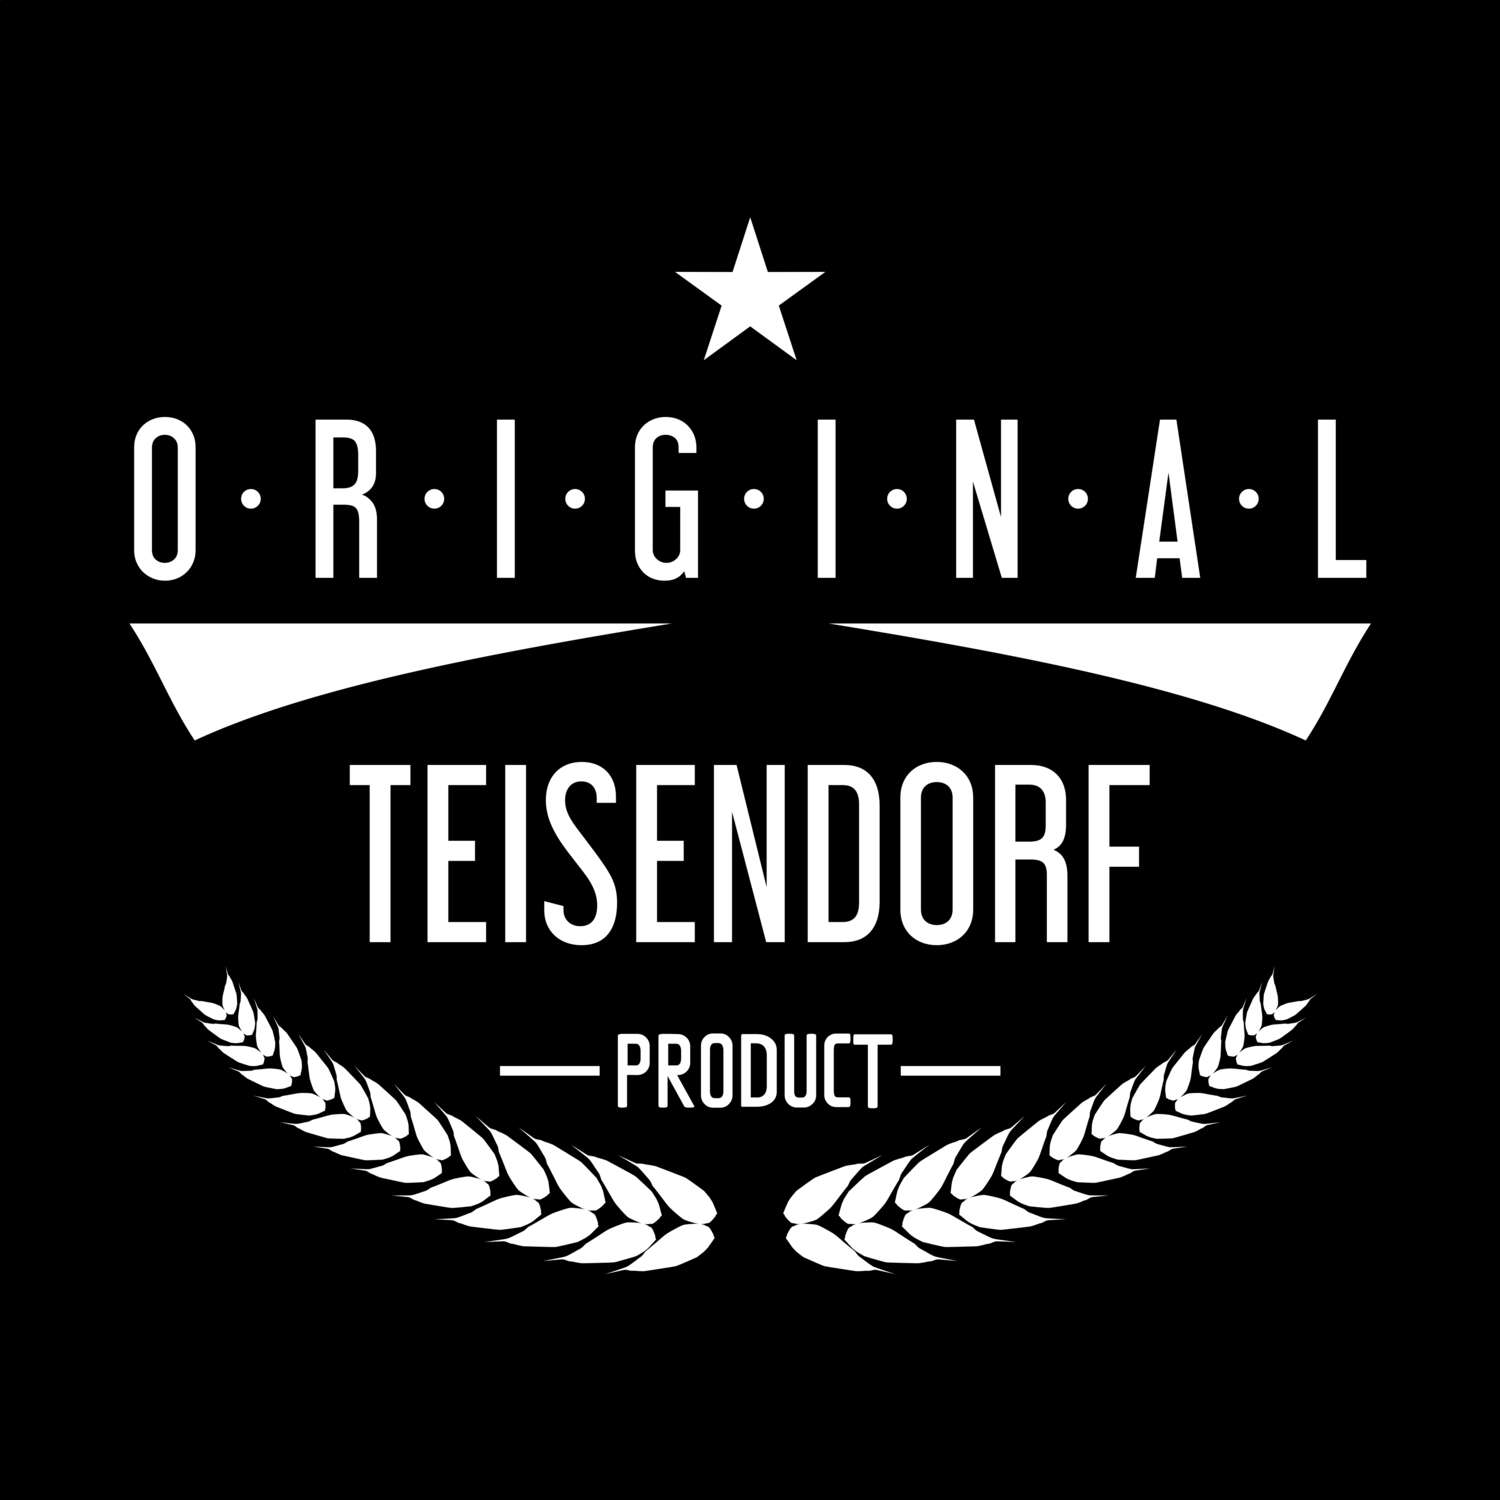 Teisendorf T-Shirt »Original Product«